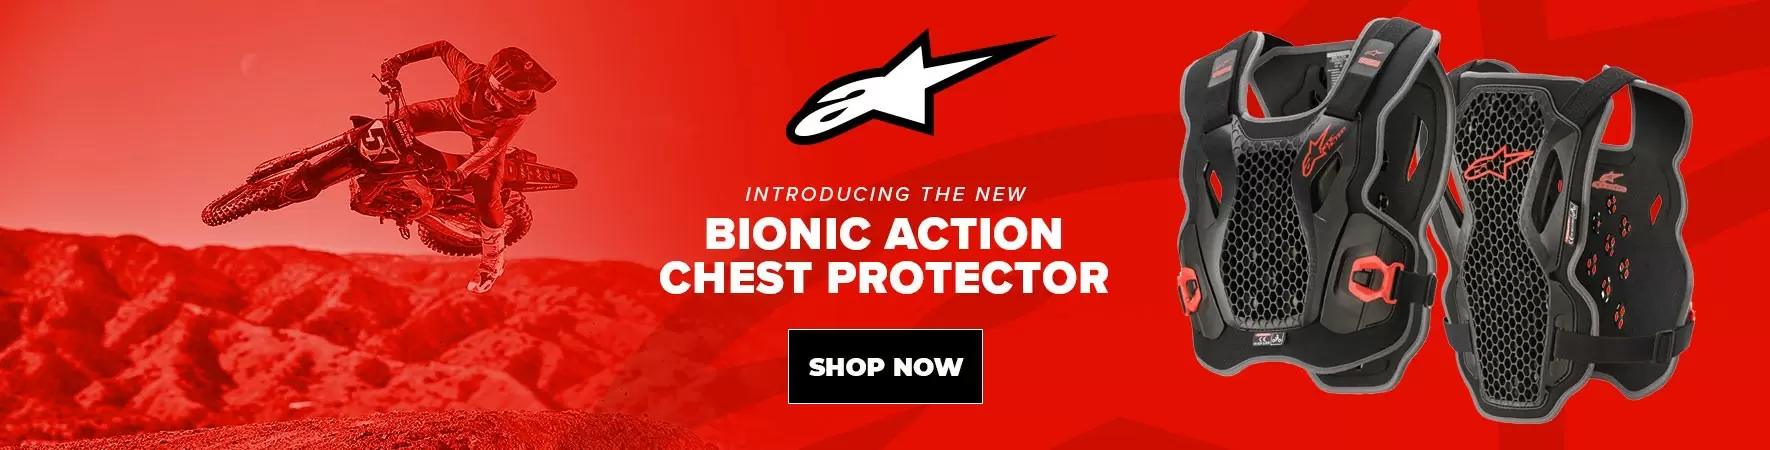 Alpine Stars bionic chest protectors 